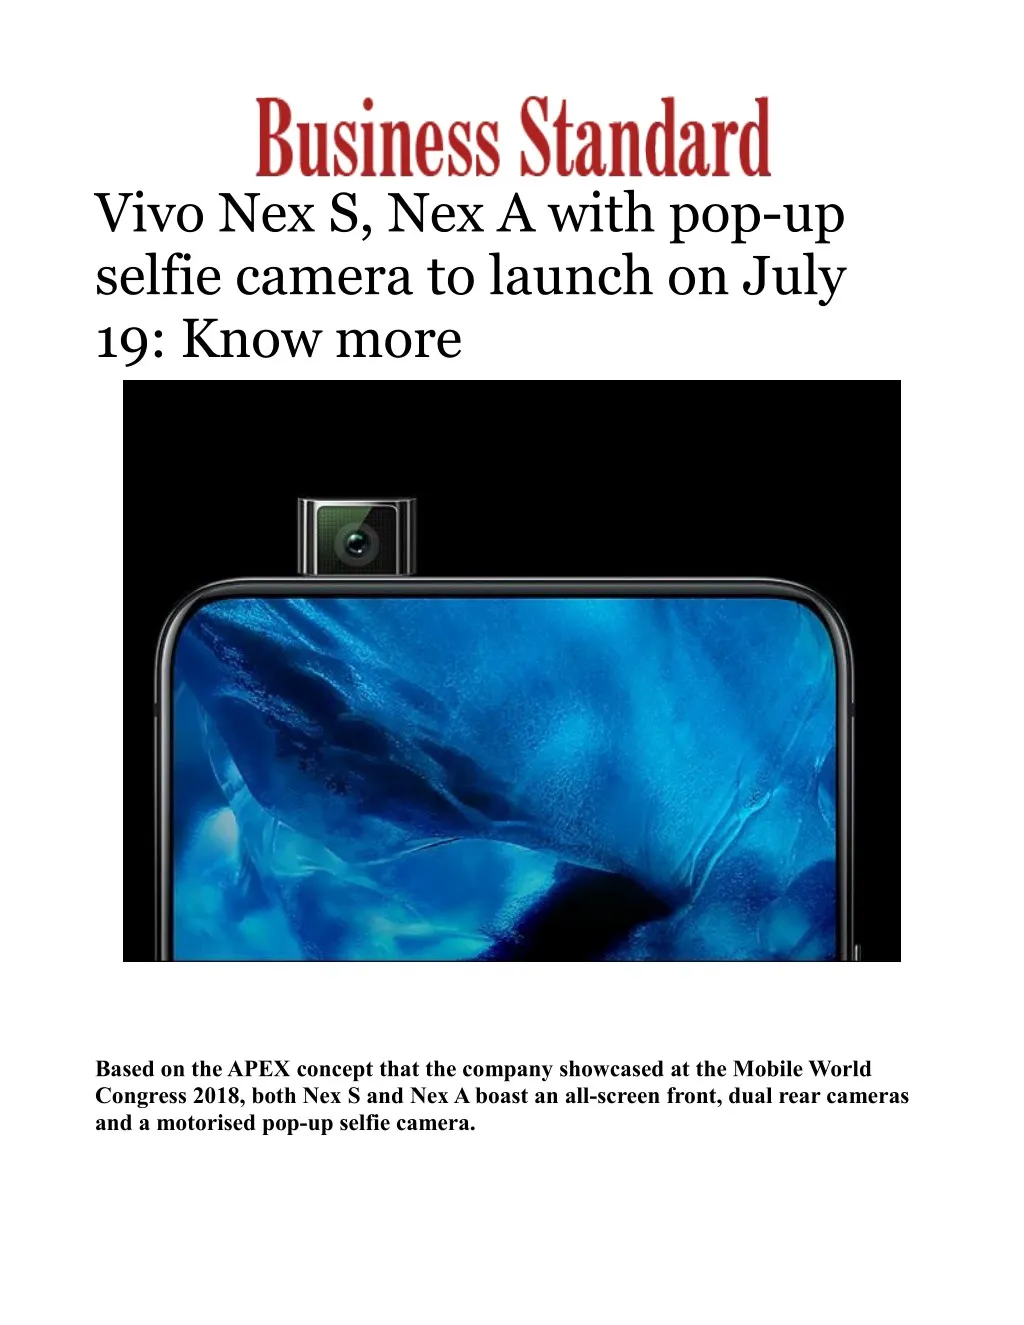 vivo nex s nex a with pop up selfie camera